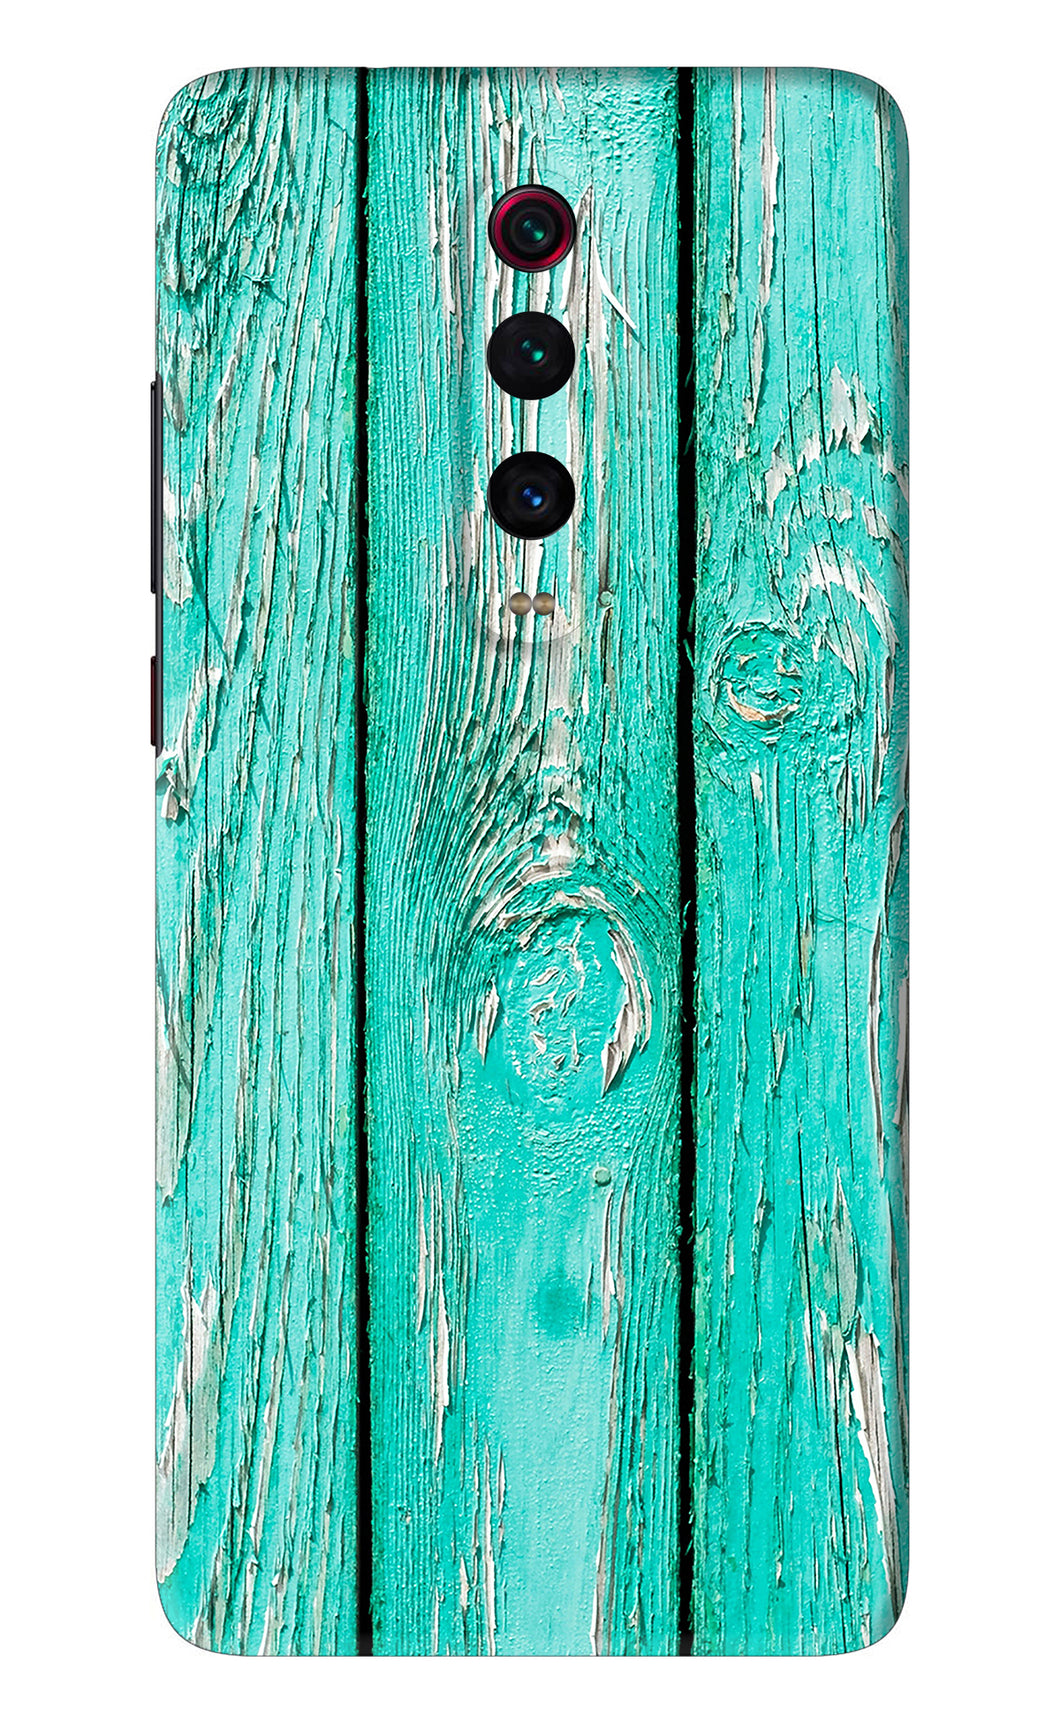 Blue Wood Xiaomi Redmi K20 Pro Back Skin Wrap